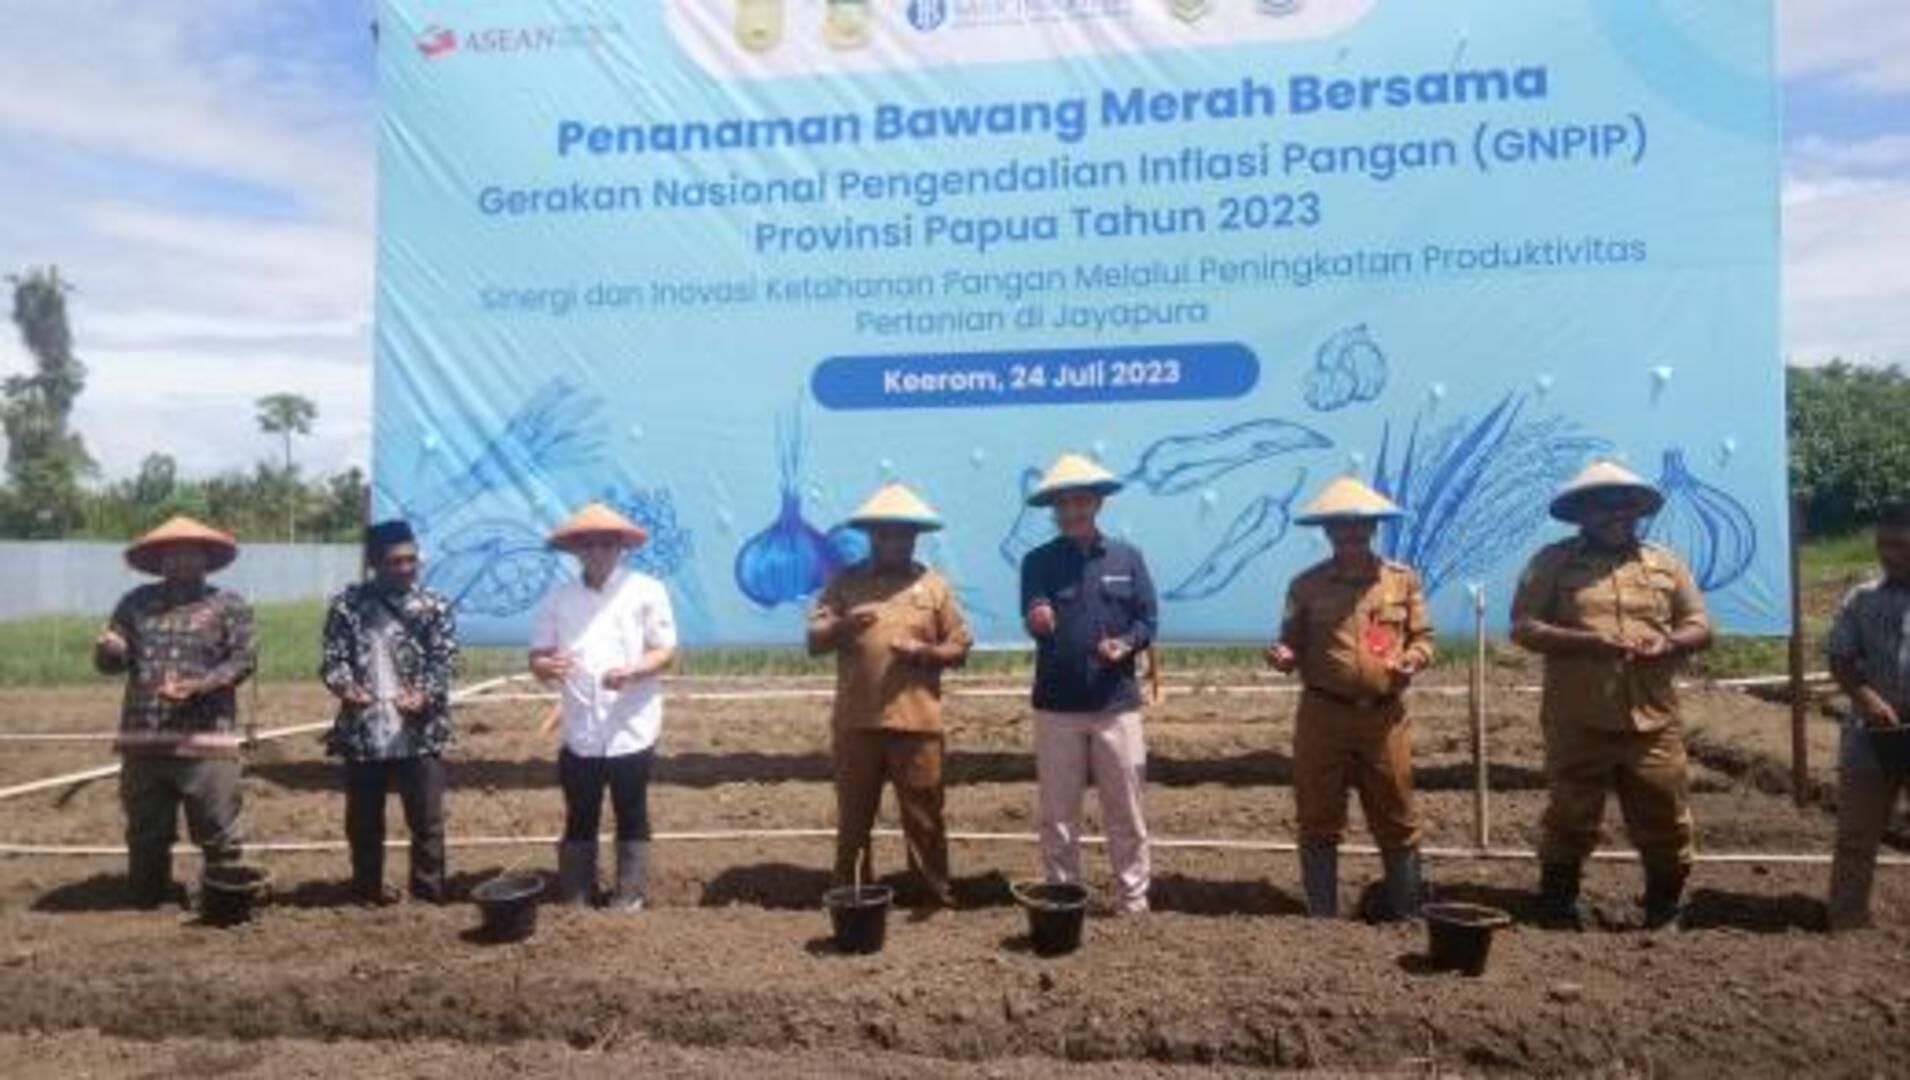 Prosesi penanaman bawang merah di Arso 4 Kabupaten Keerom, Papua pada 24 Juli 2023